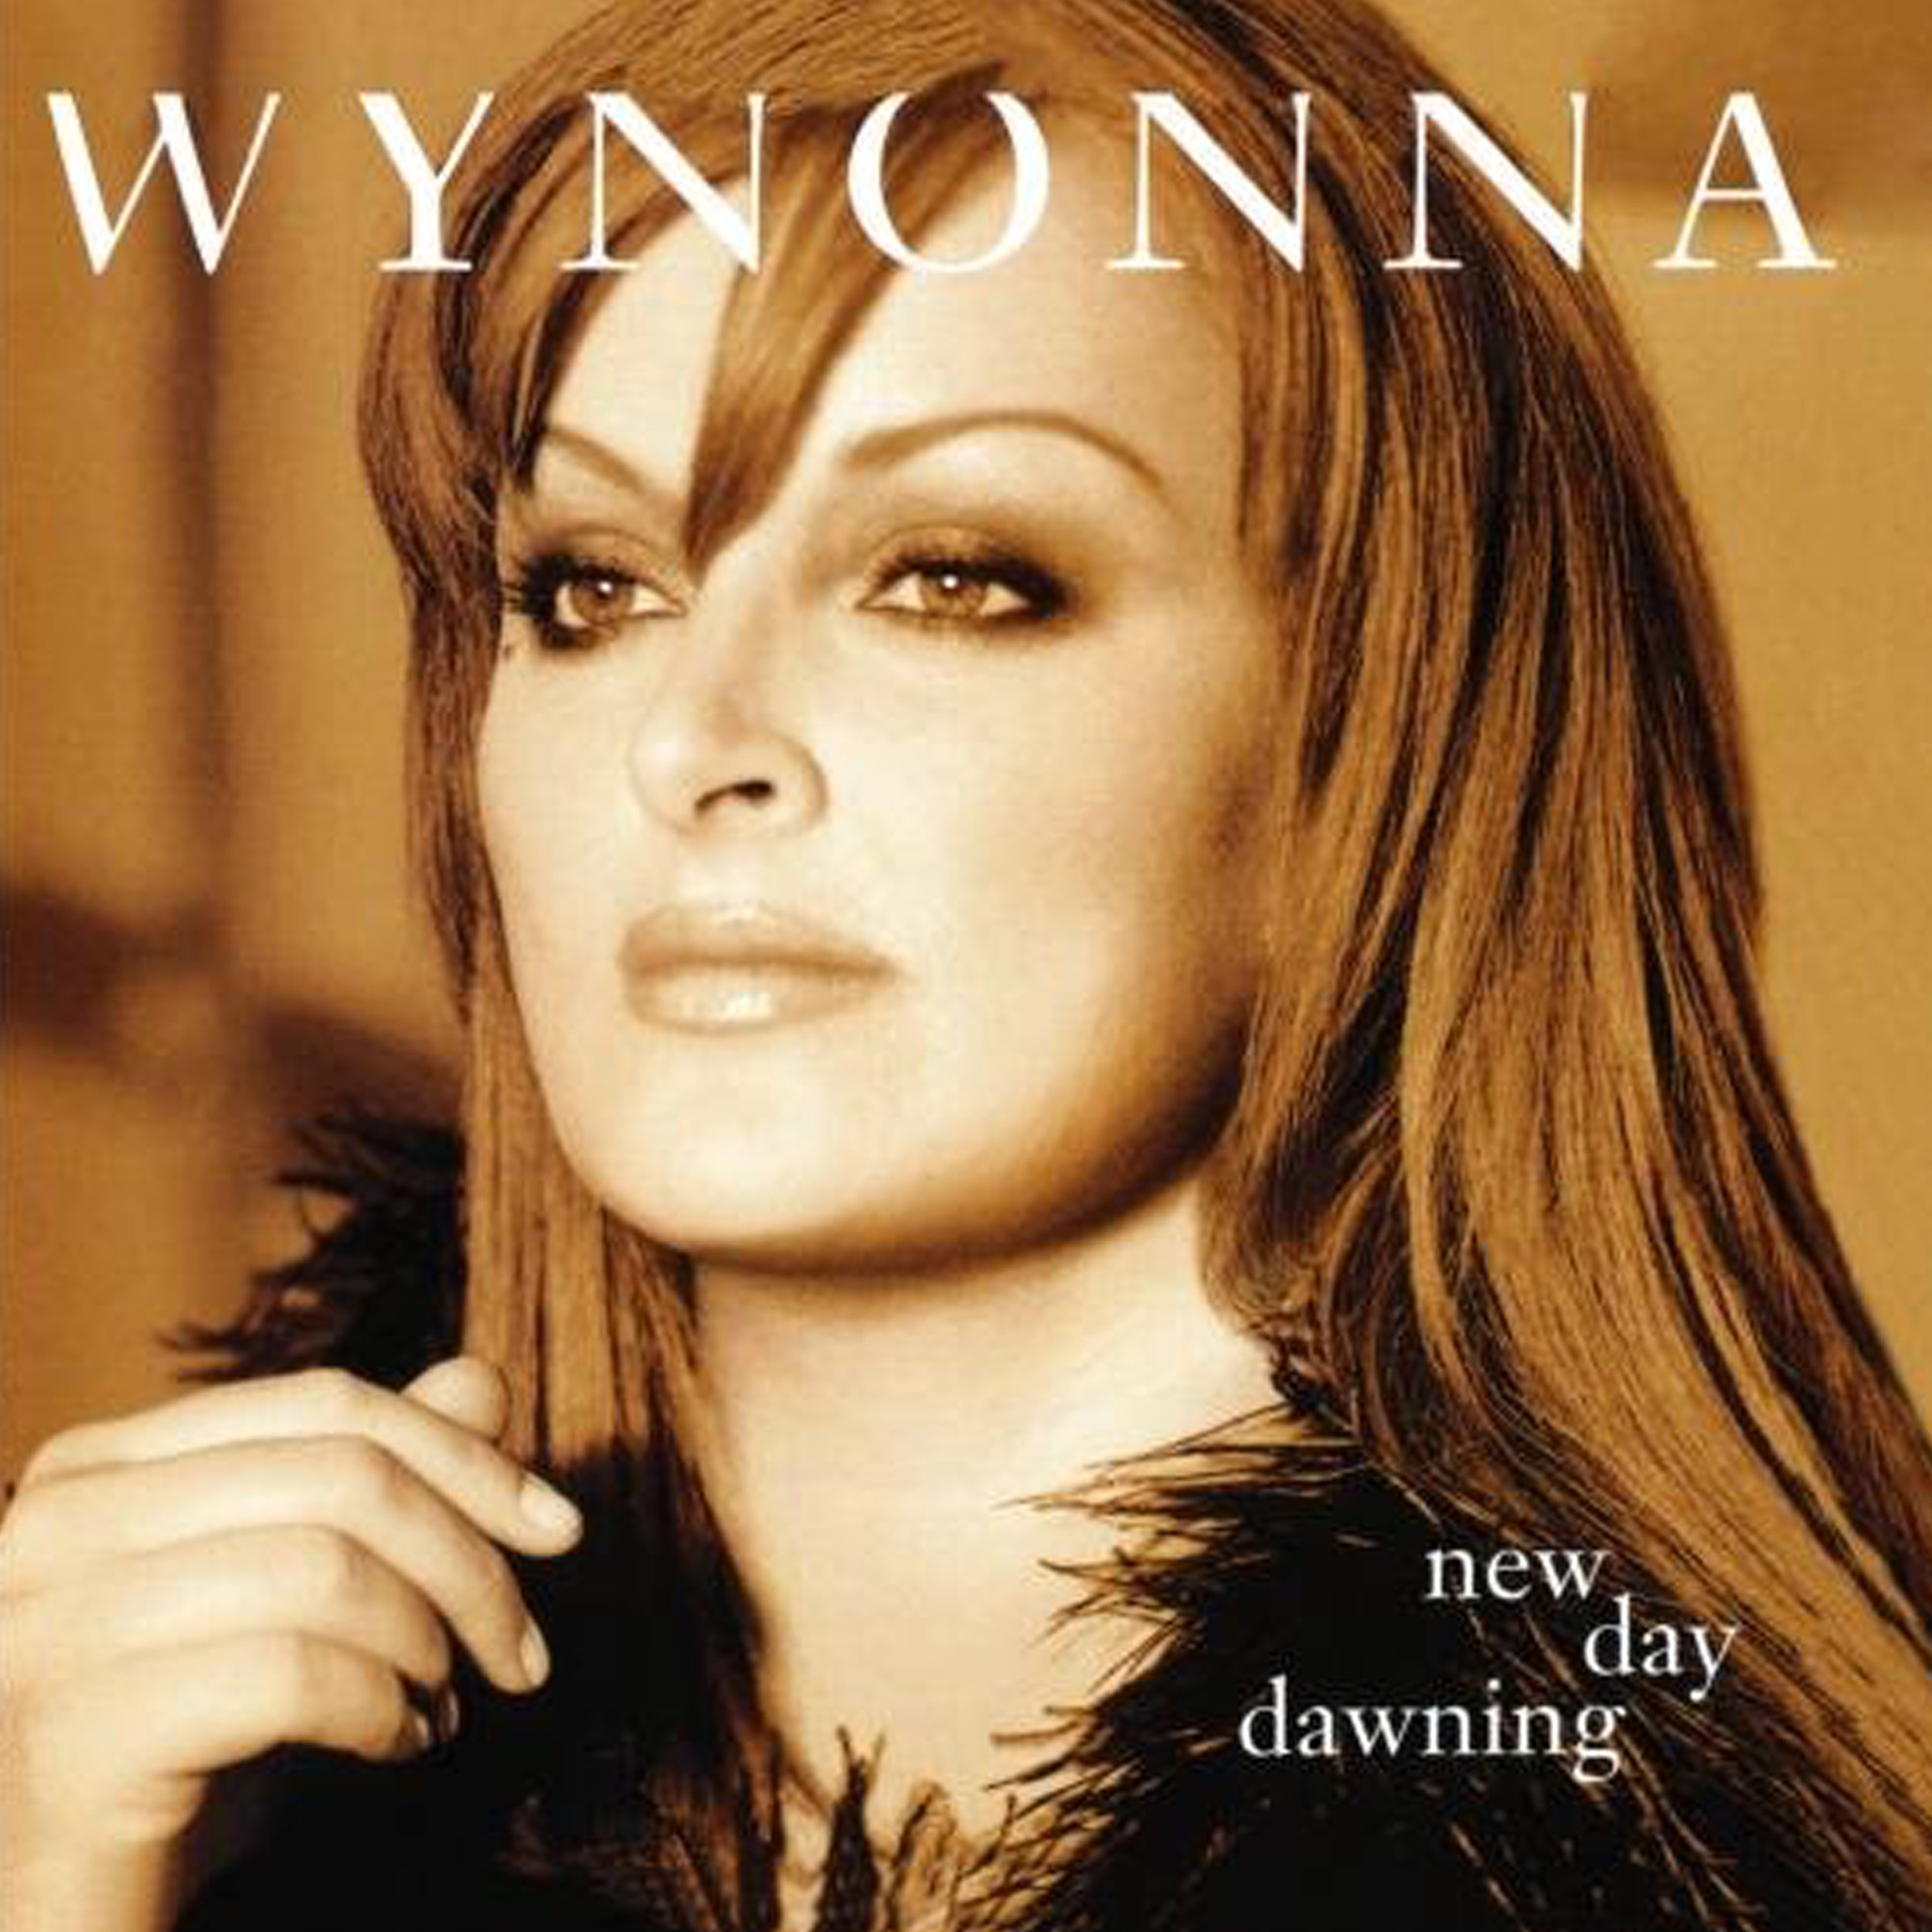 Wynonna New Day Dawning.jpg